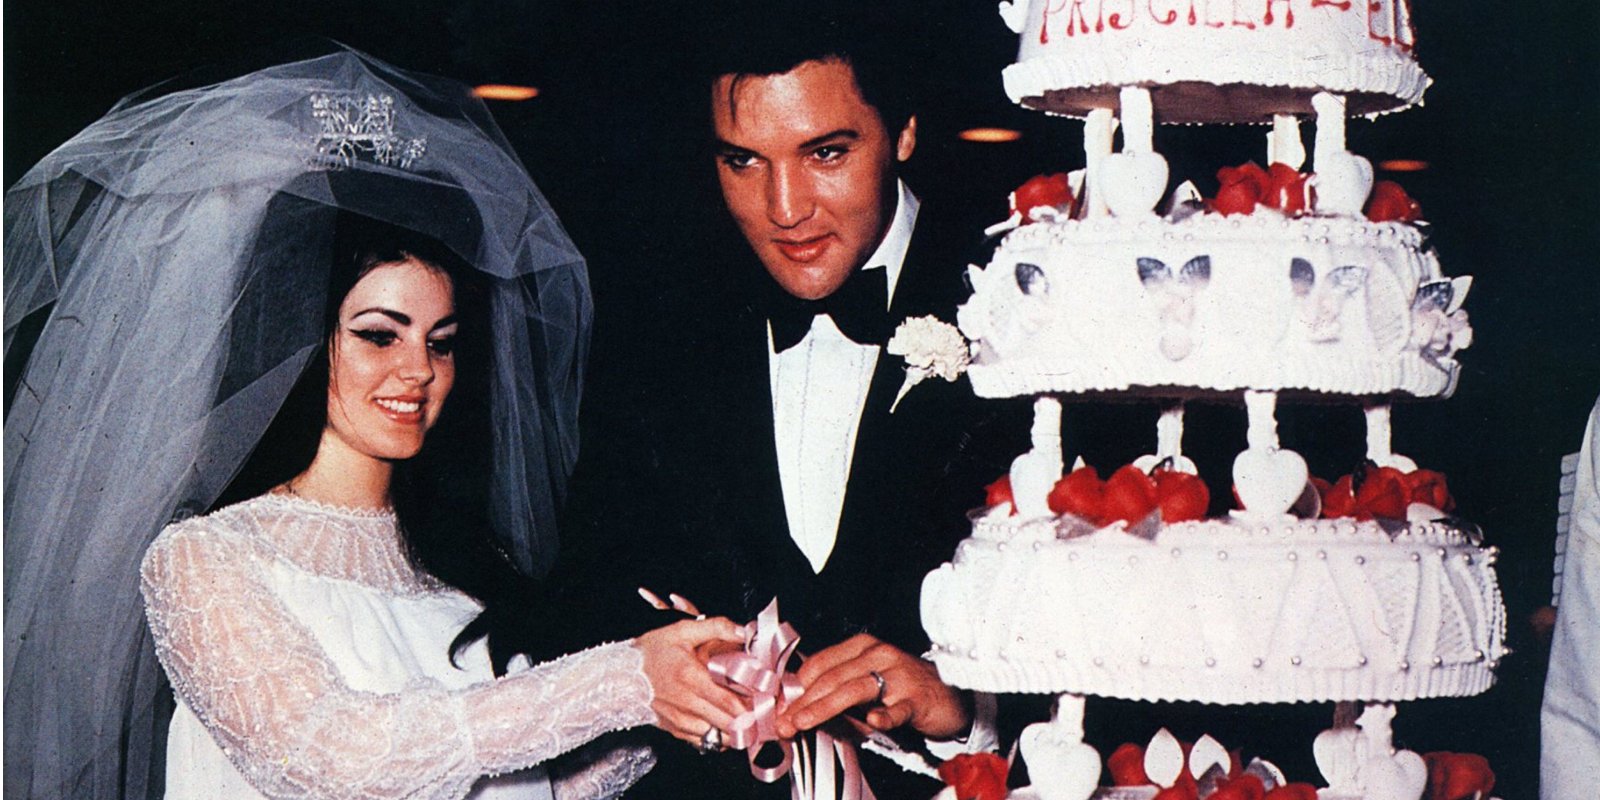 Priscilla and Elvis Presley cut their wedding cake in Las Vegas in May 1967.